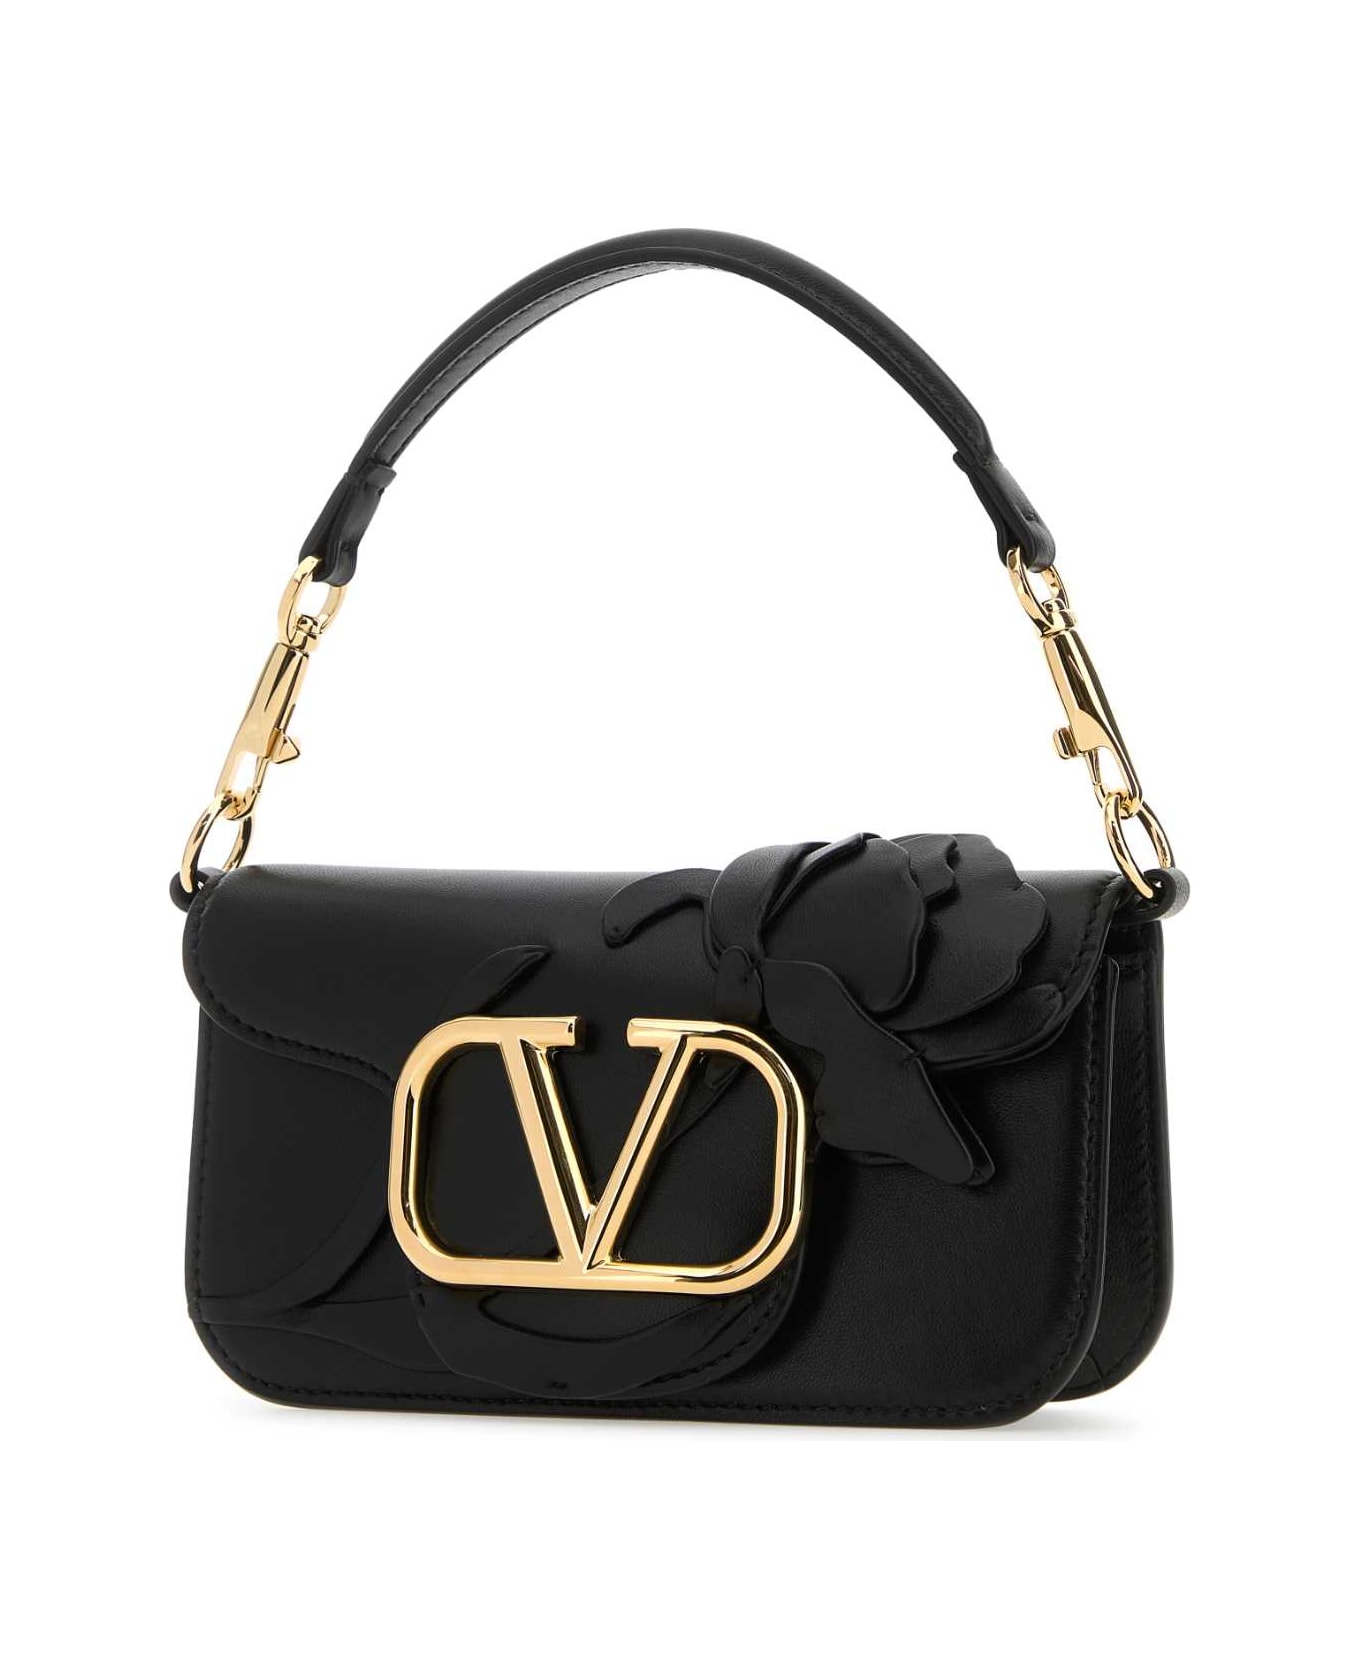 Valentino Garavani Black Leather Locã² Small Handbag - NERO